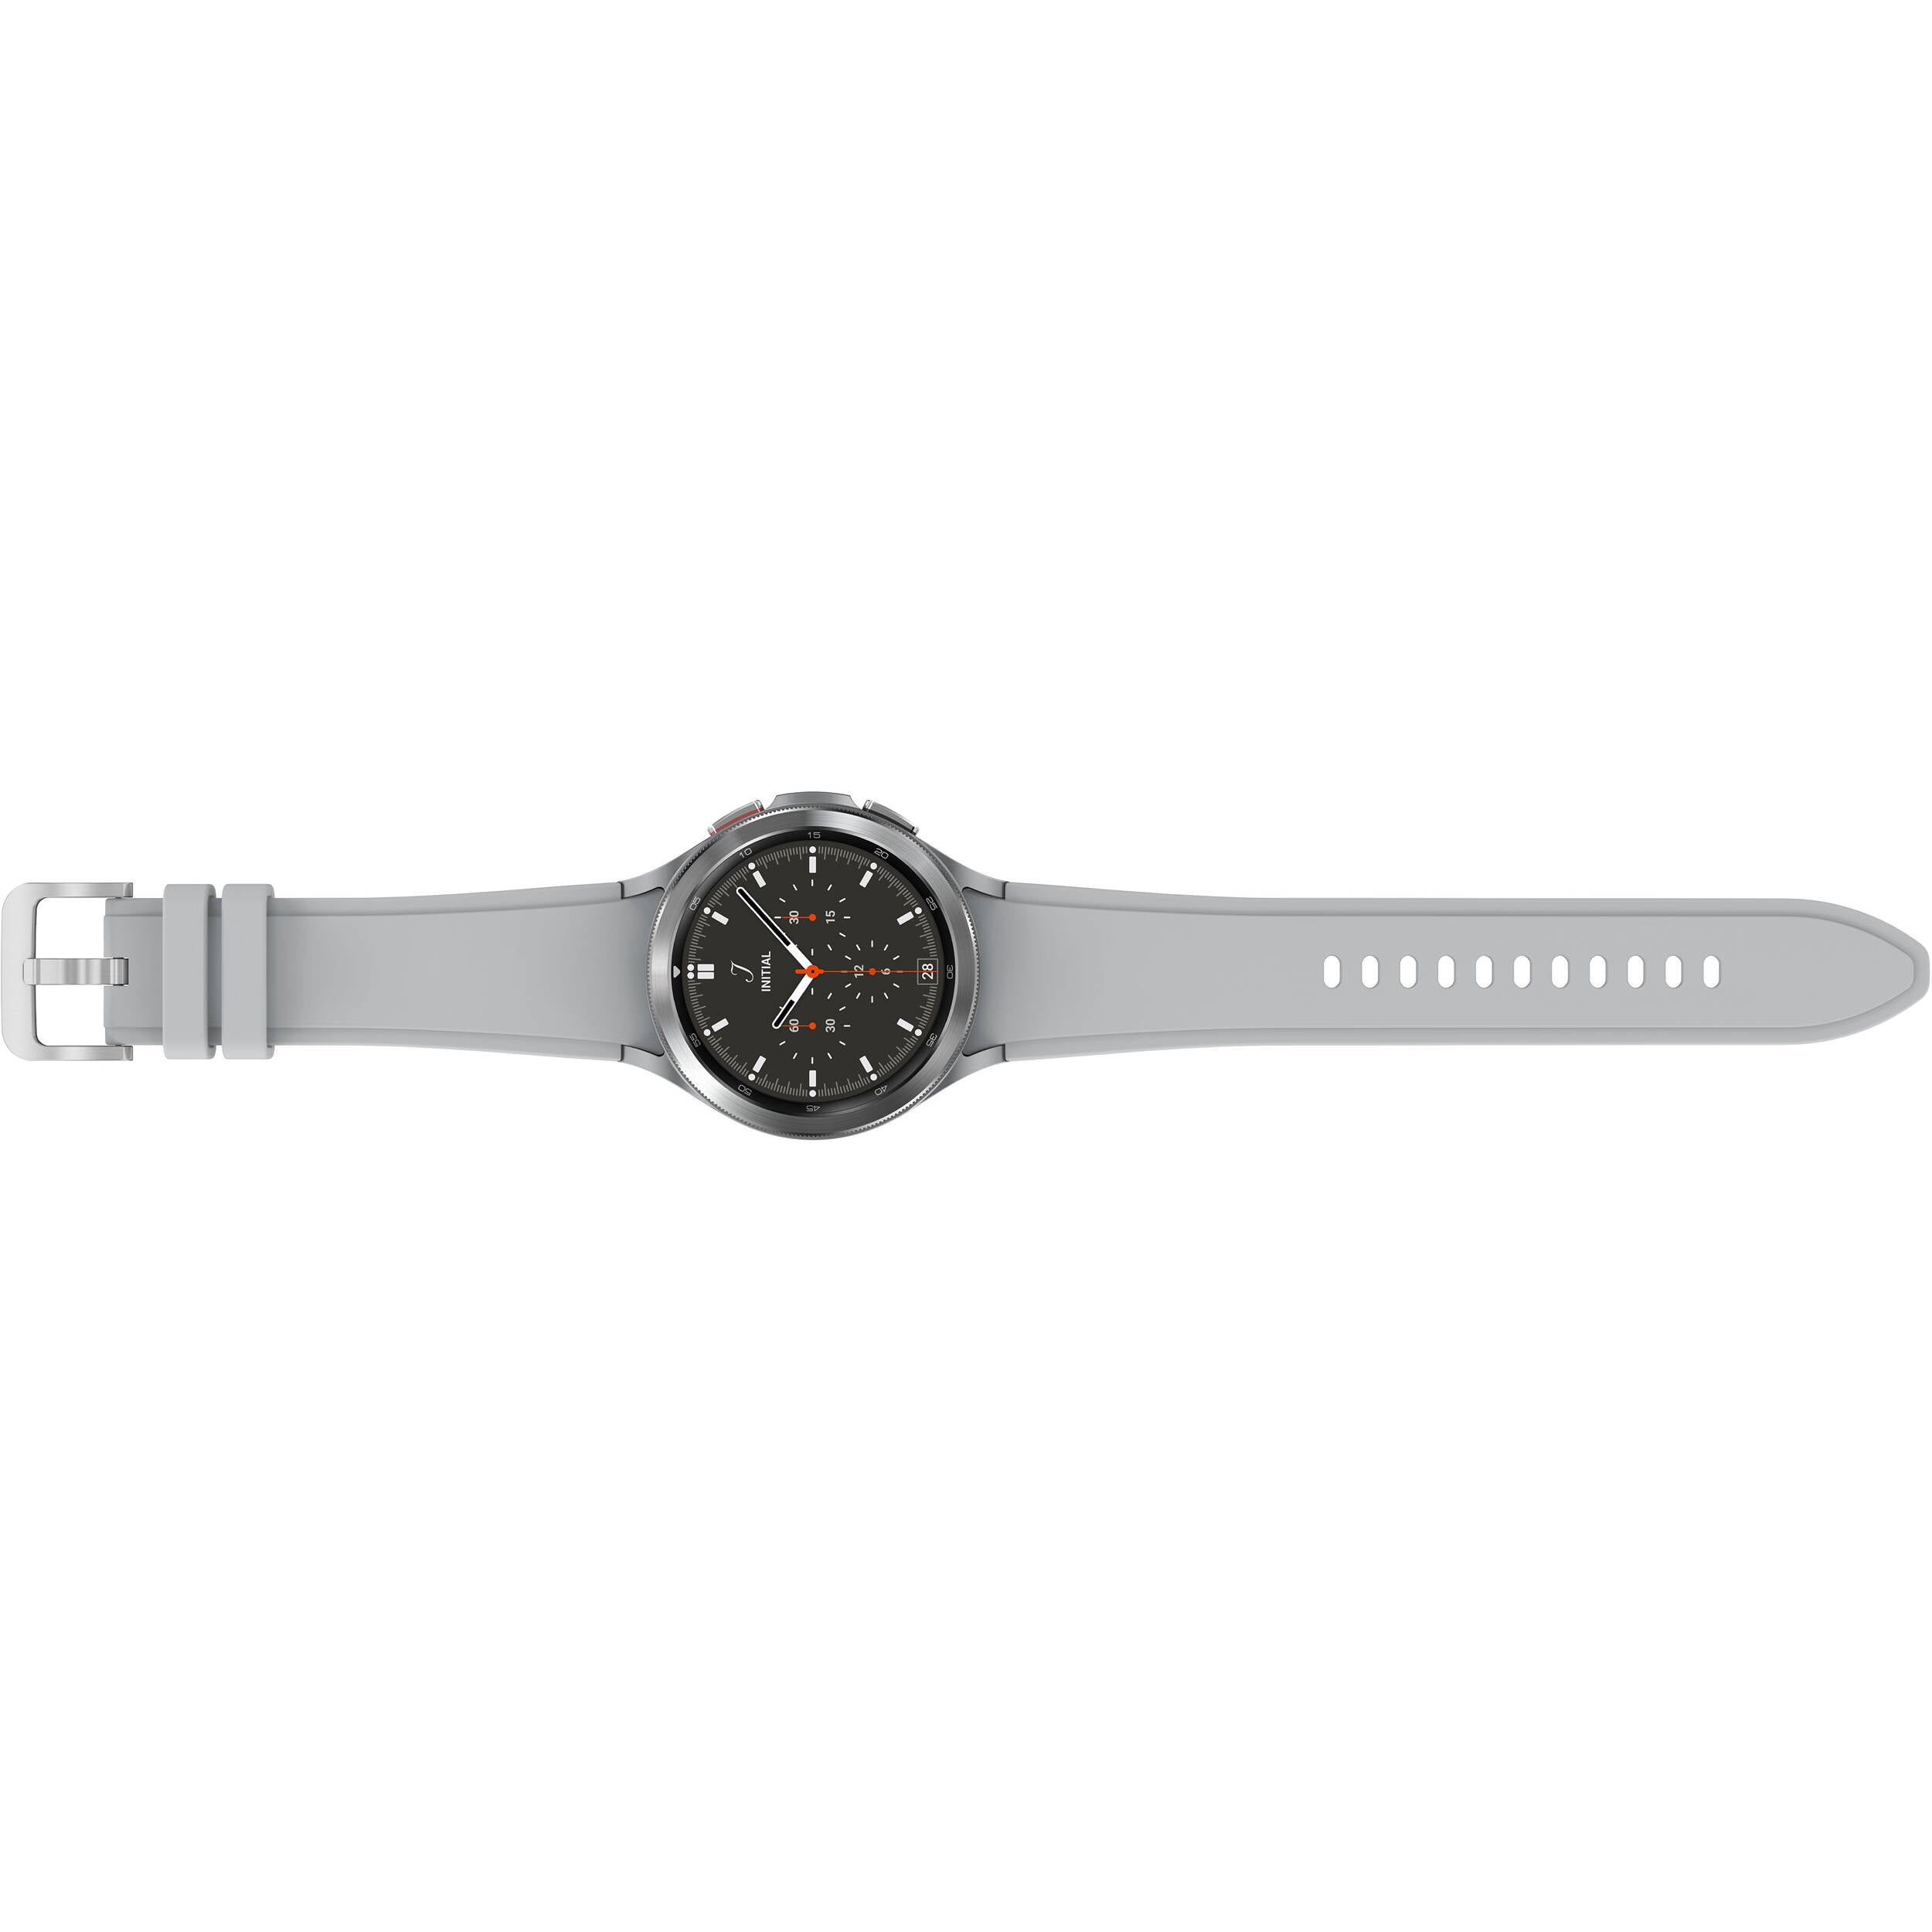 Samsung SM-R890NZSAXAA-RB Galaxy Watch4 Classic 46mm Bluetooth Smartwatch Silver - Certified Refurbished